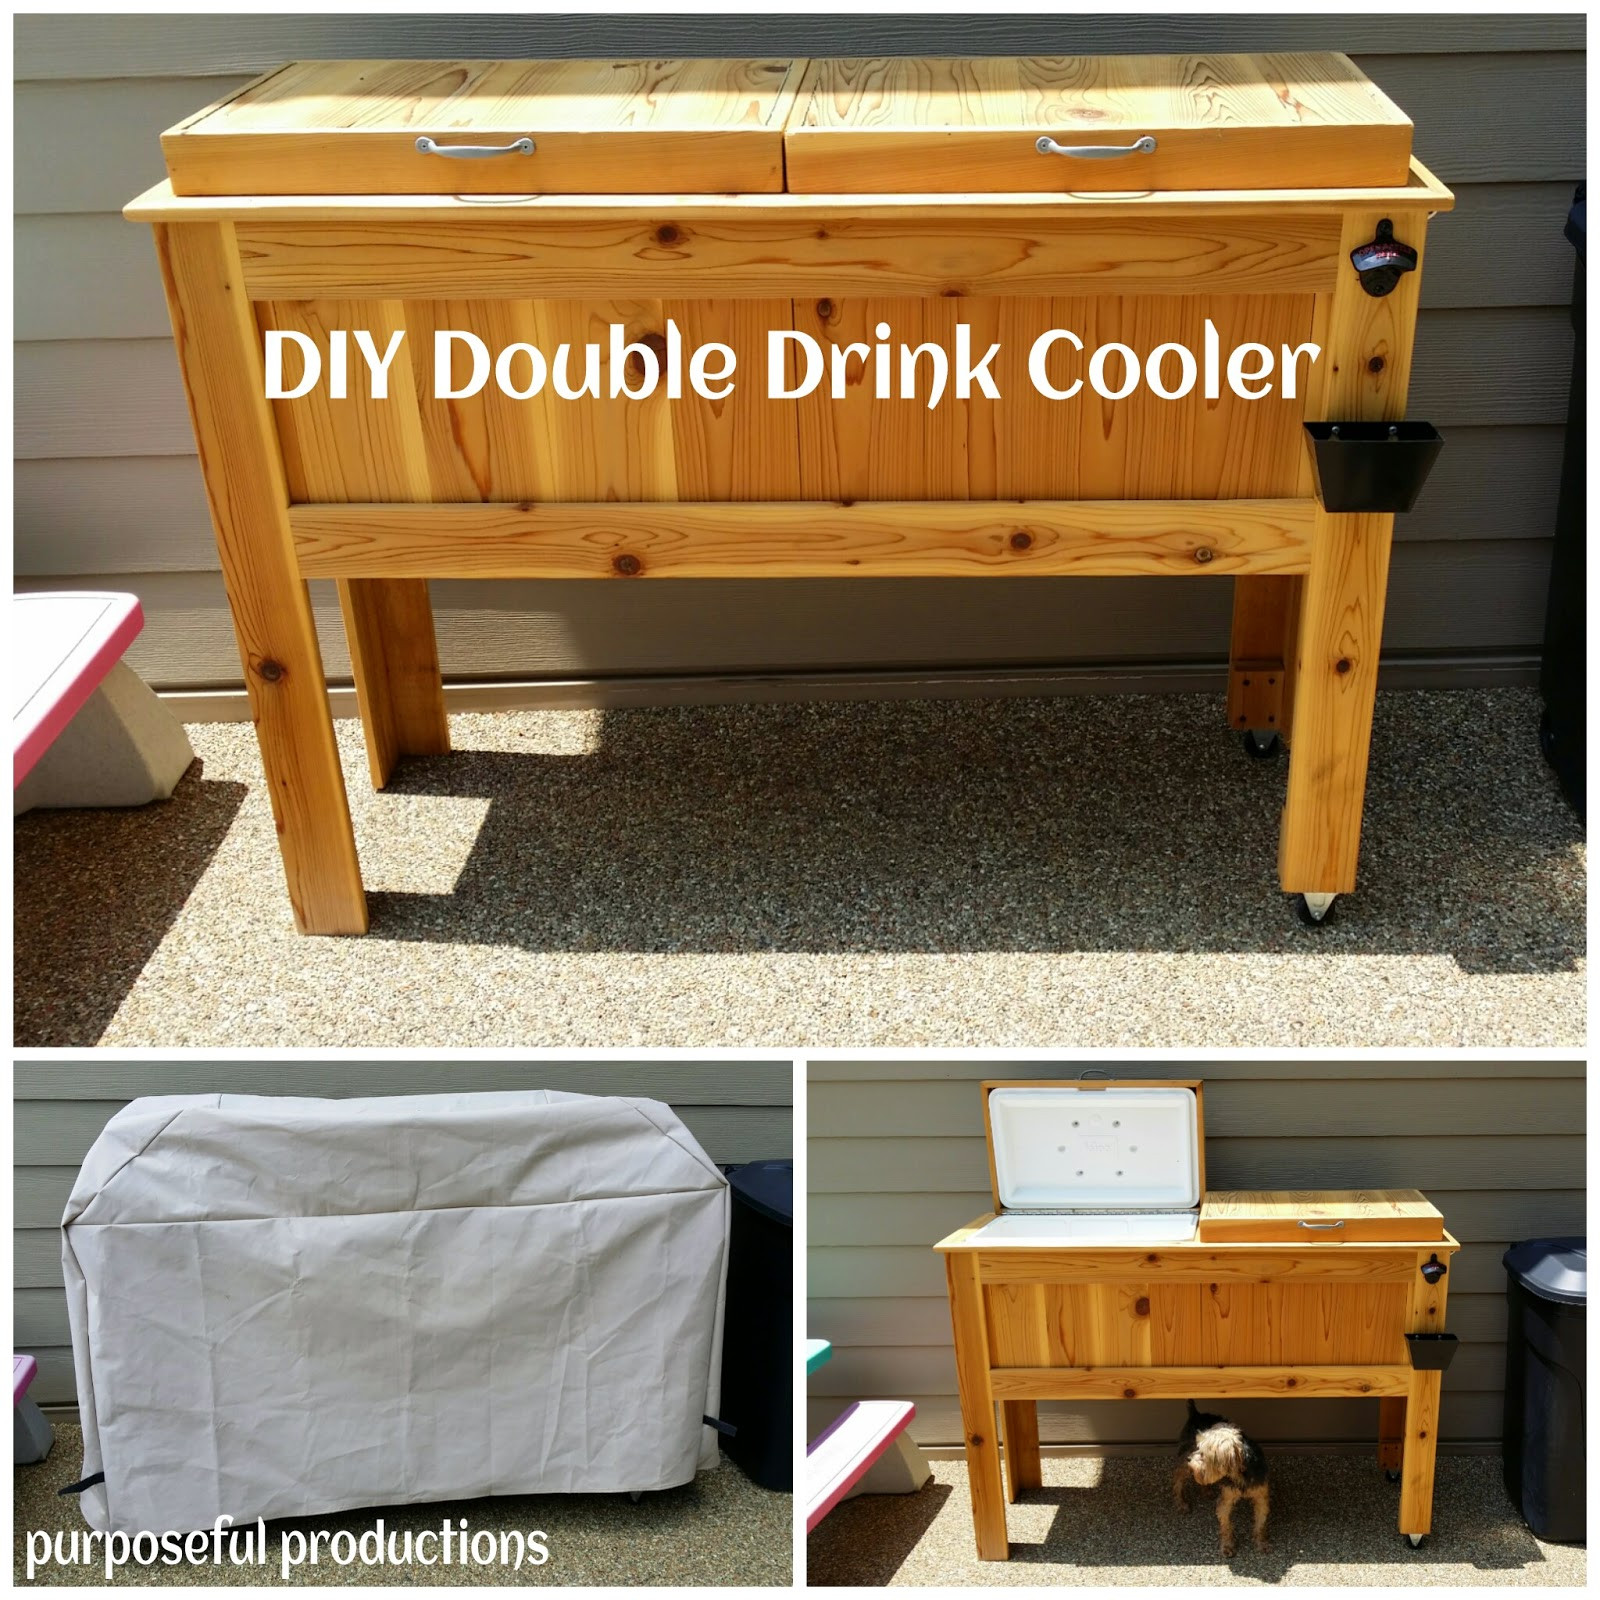 DIY Outdoor Cooler
 Purposeful Productions DIY Wood Drink Cooler